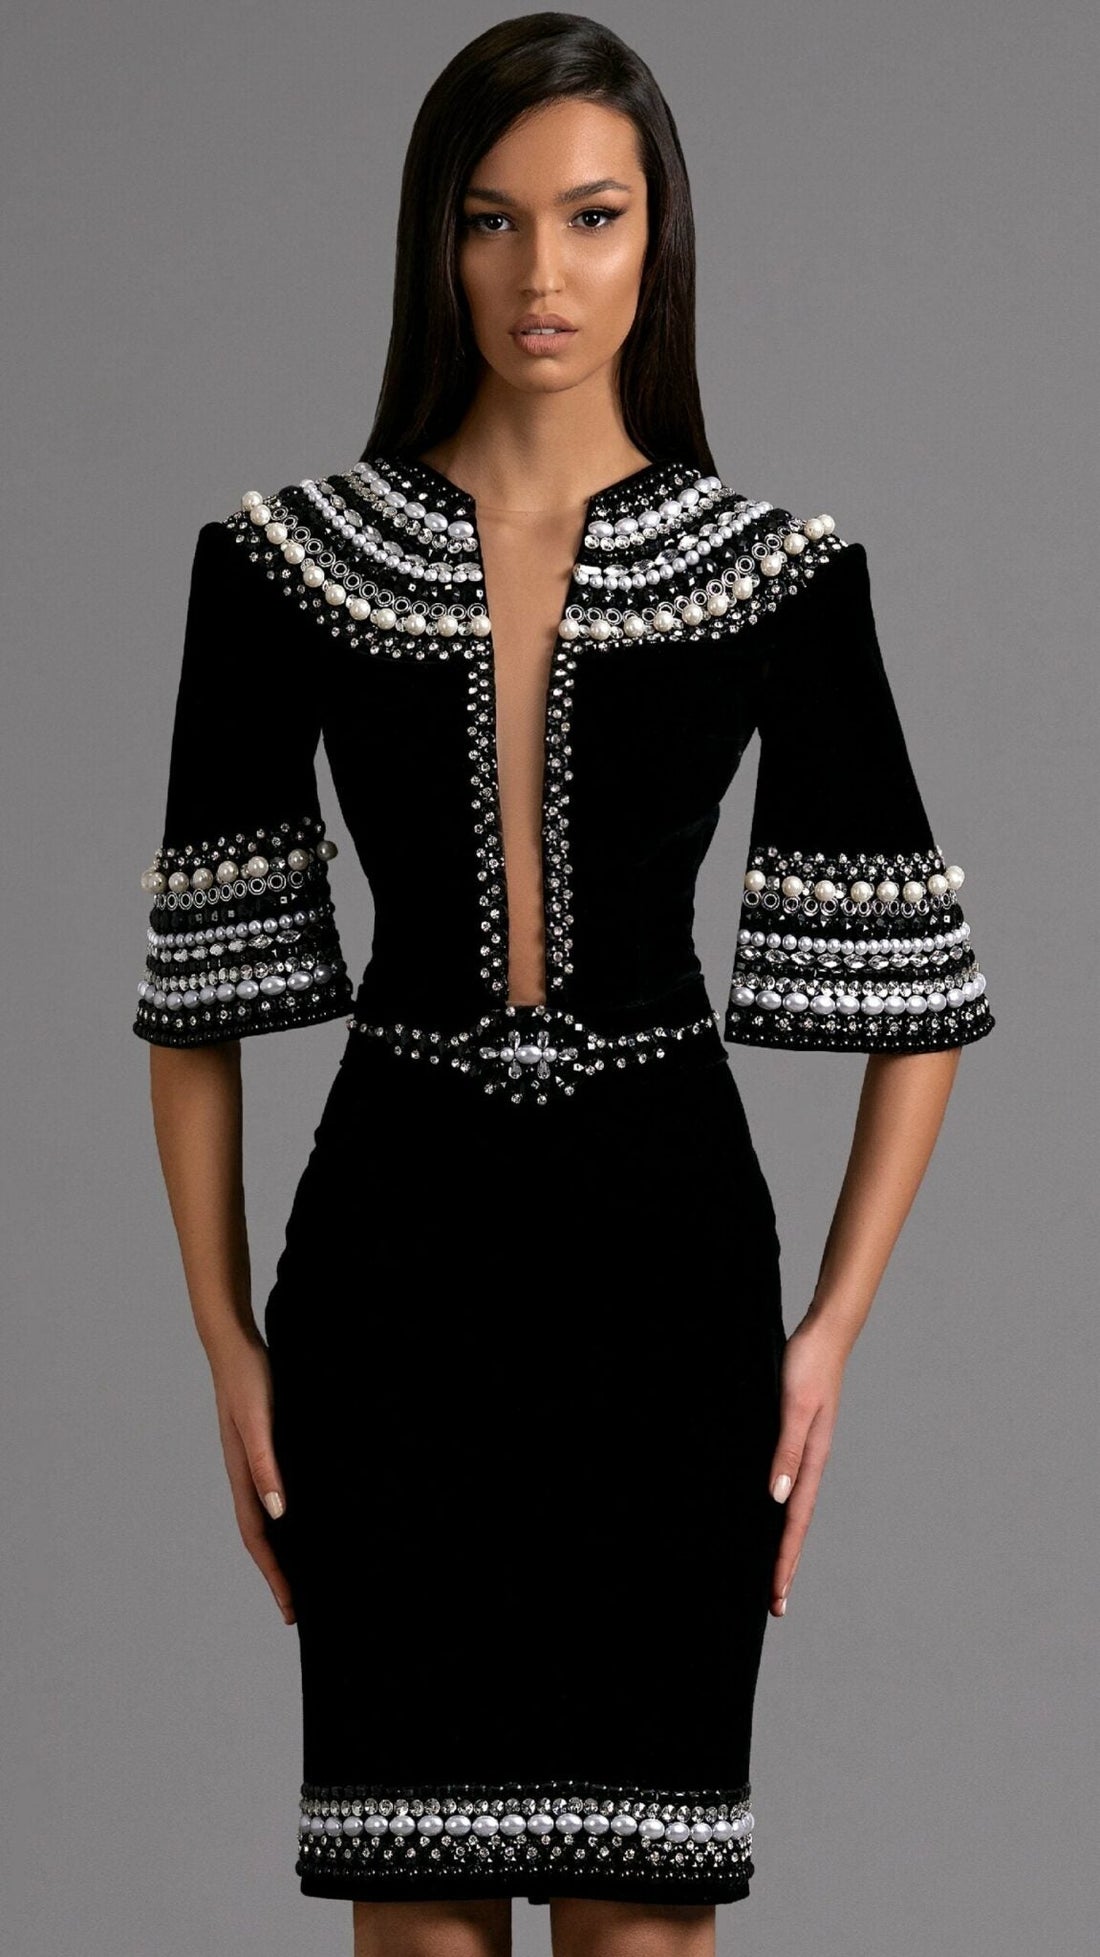 Elegant Black Cocktail Dress with Embellished Trim - KUJTA & MERI - KUJTA & MERI